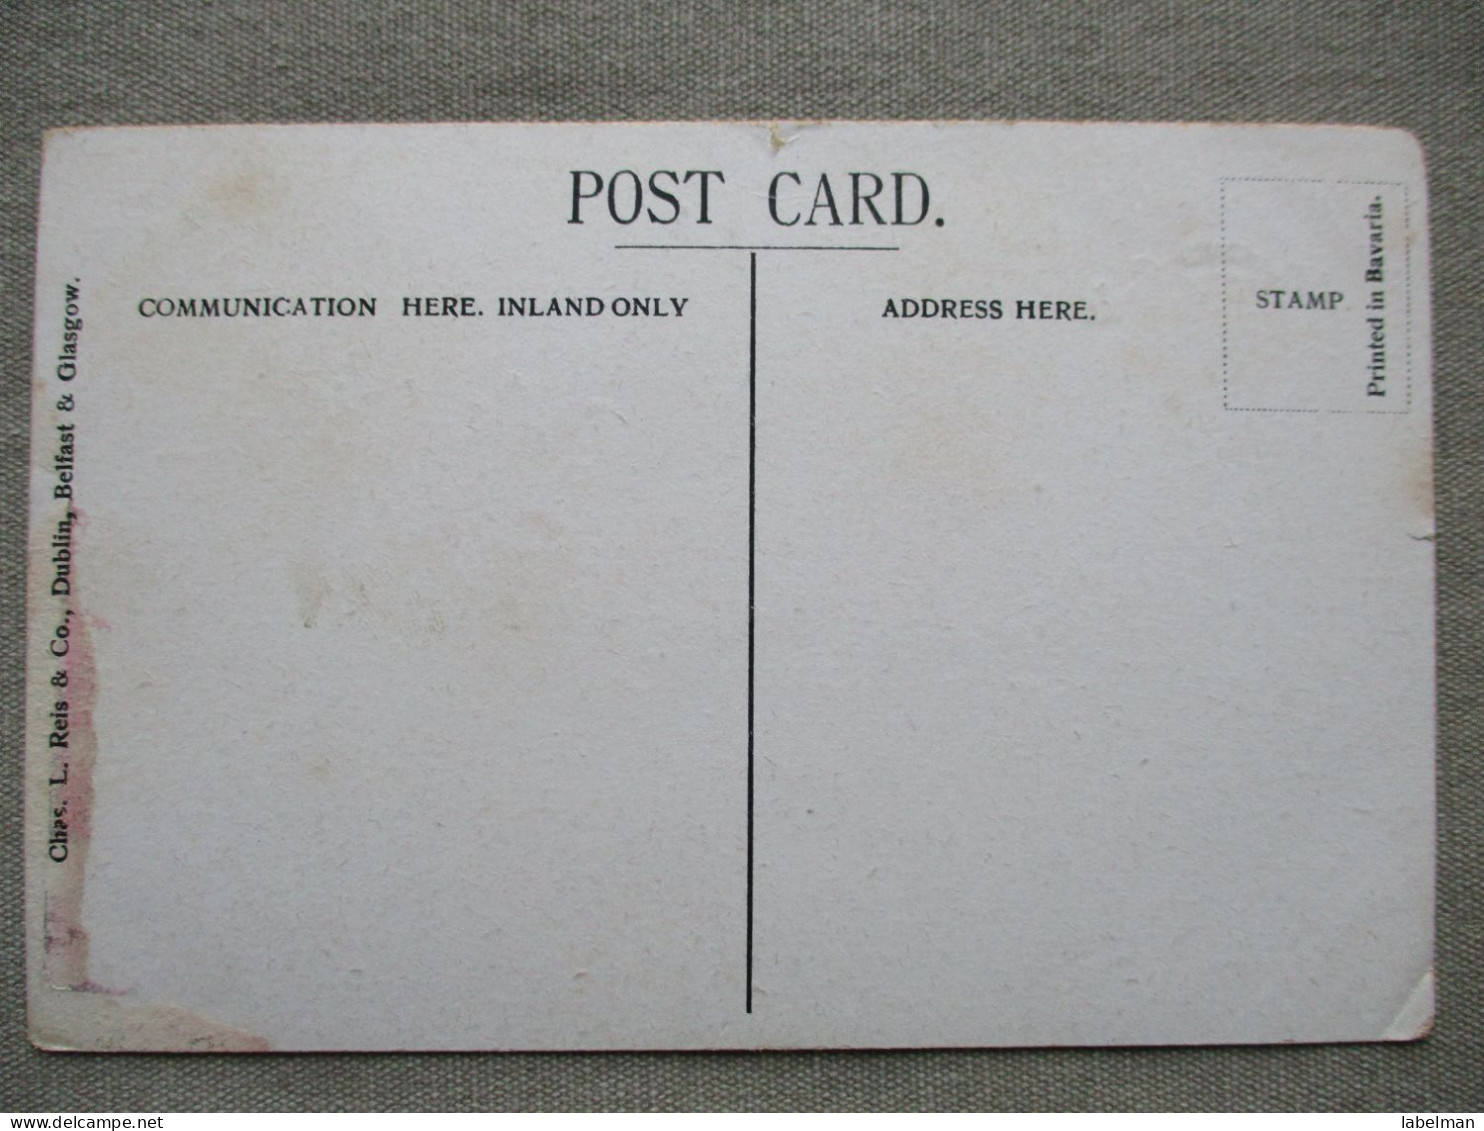 IRLAND UK UNITED KINGDOM DUBLIN CUSTOM HOUSE HARBOUR KARTE CARD POSTKARTE POSTCARD ANSICHTSKARTE CARTOLINA CARTE POSTALE - Collections & Lots